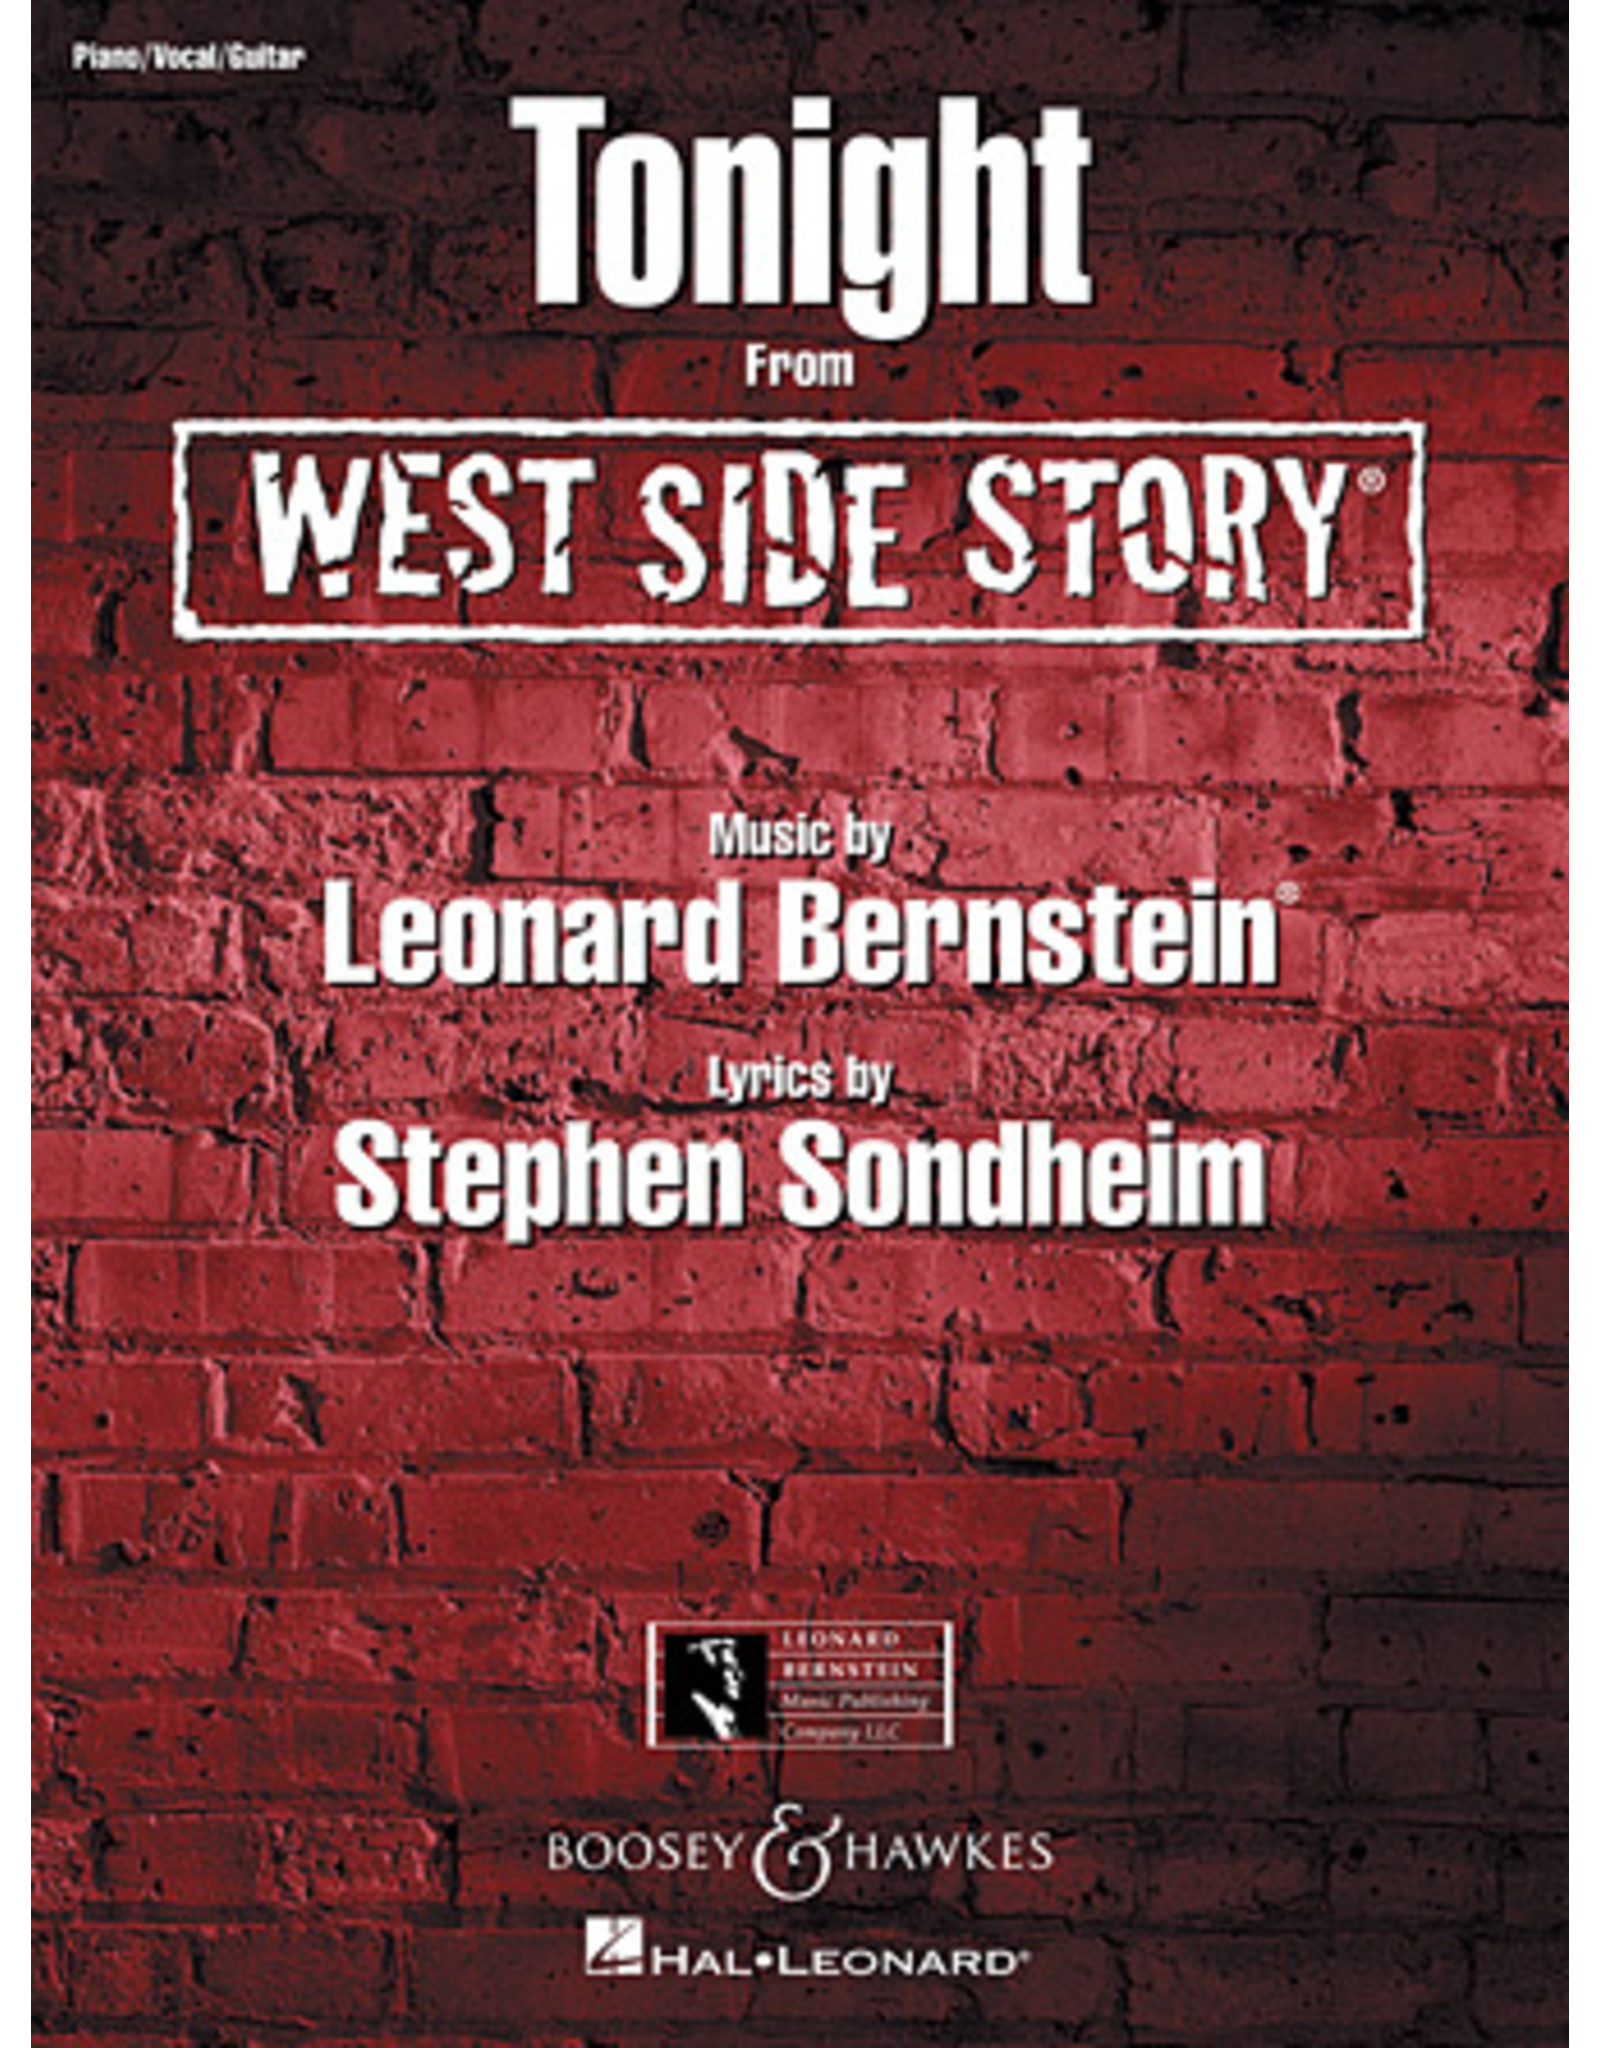 Hal Leonard Tonight (from West Side Story) by Leonard Bernstein & Stephen Sondheim Piano Vocal Piano/Vocal